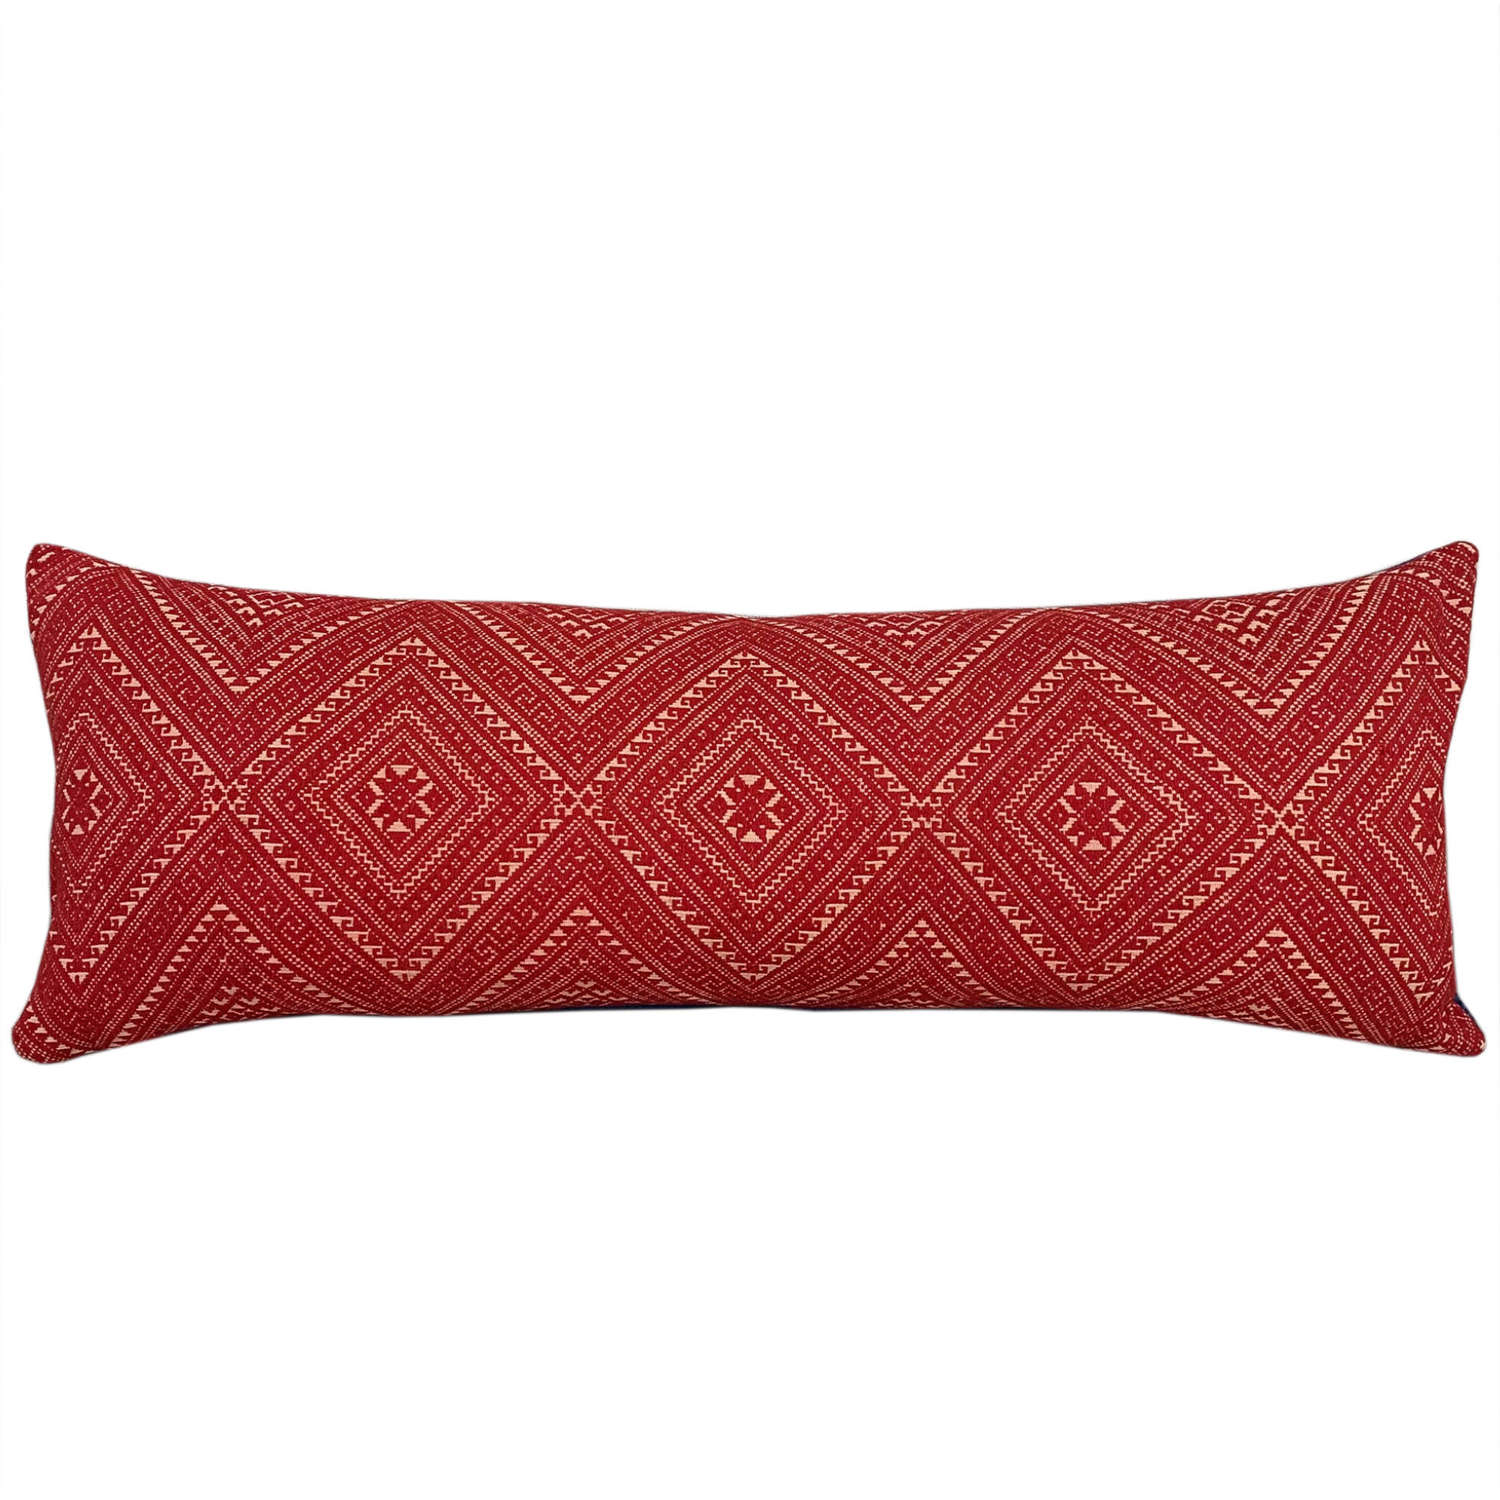 Red Dai long cushion